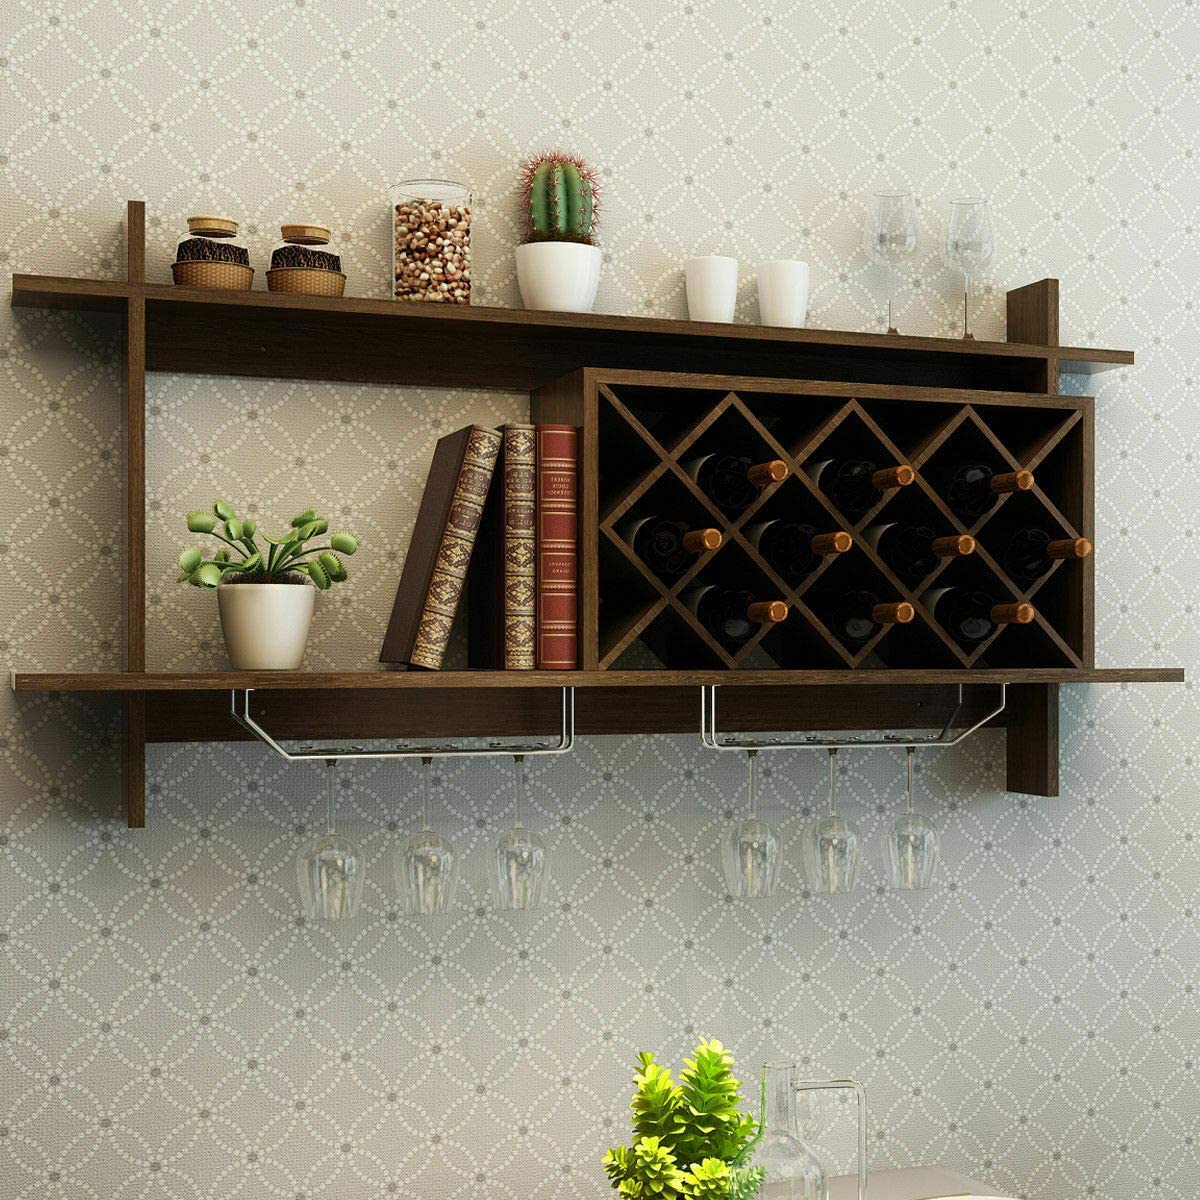 Bar Cabinet: Wall Mount Wine Rack Organizer With Glass Holder & Storage Shelf